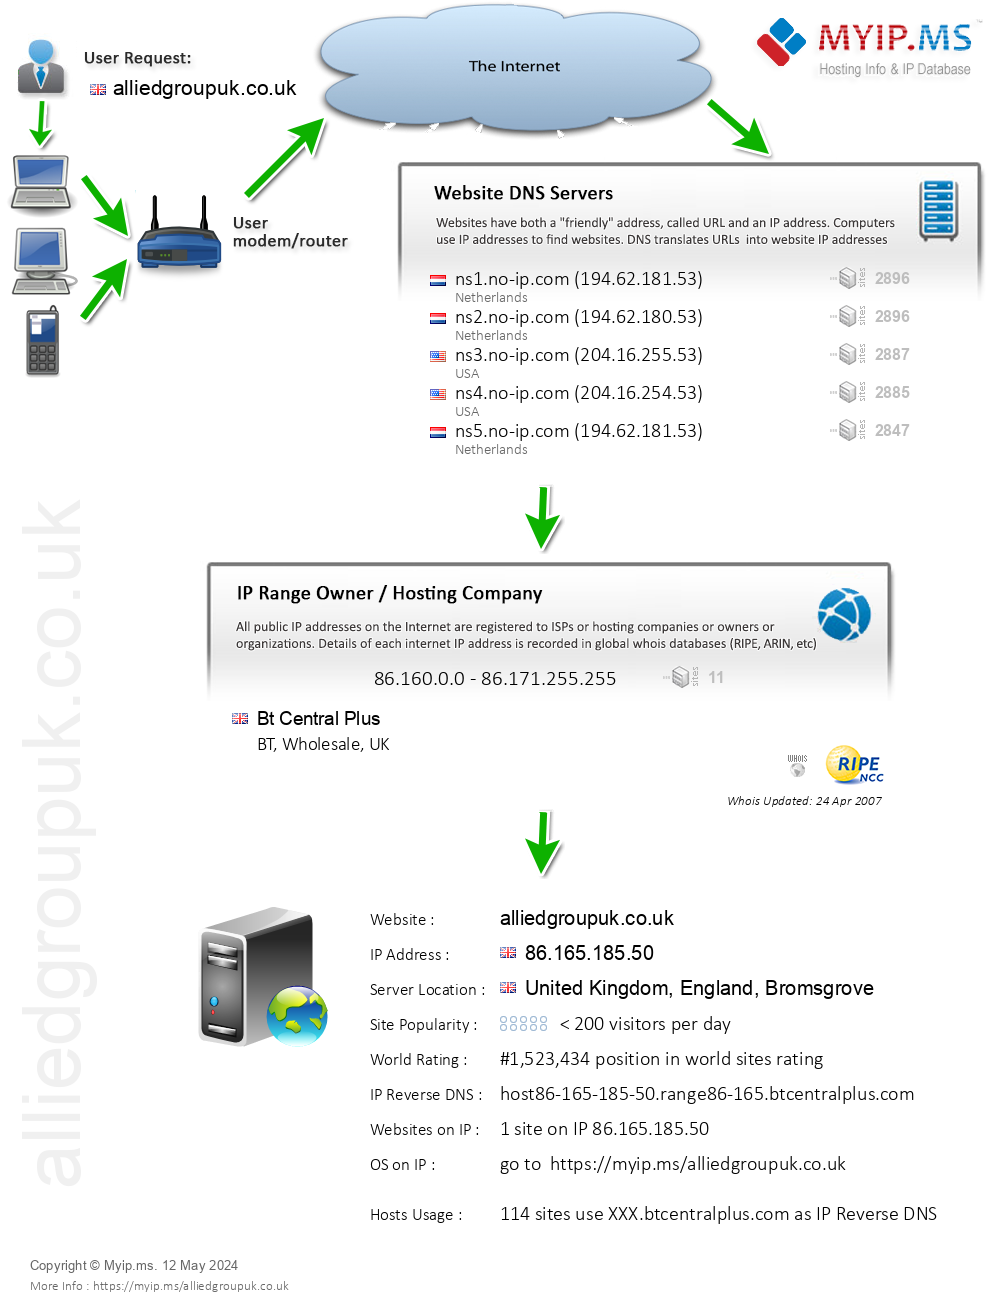 Alliedgroupuk.co.uk - Website Hosting Visual IP Diagram